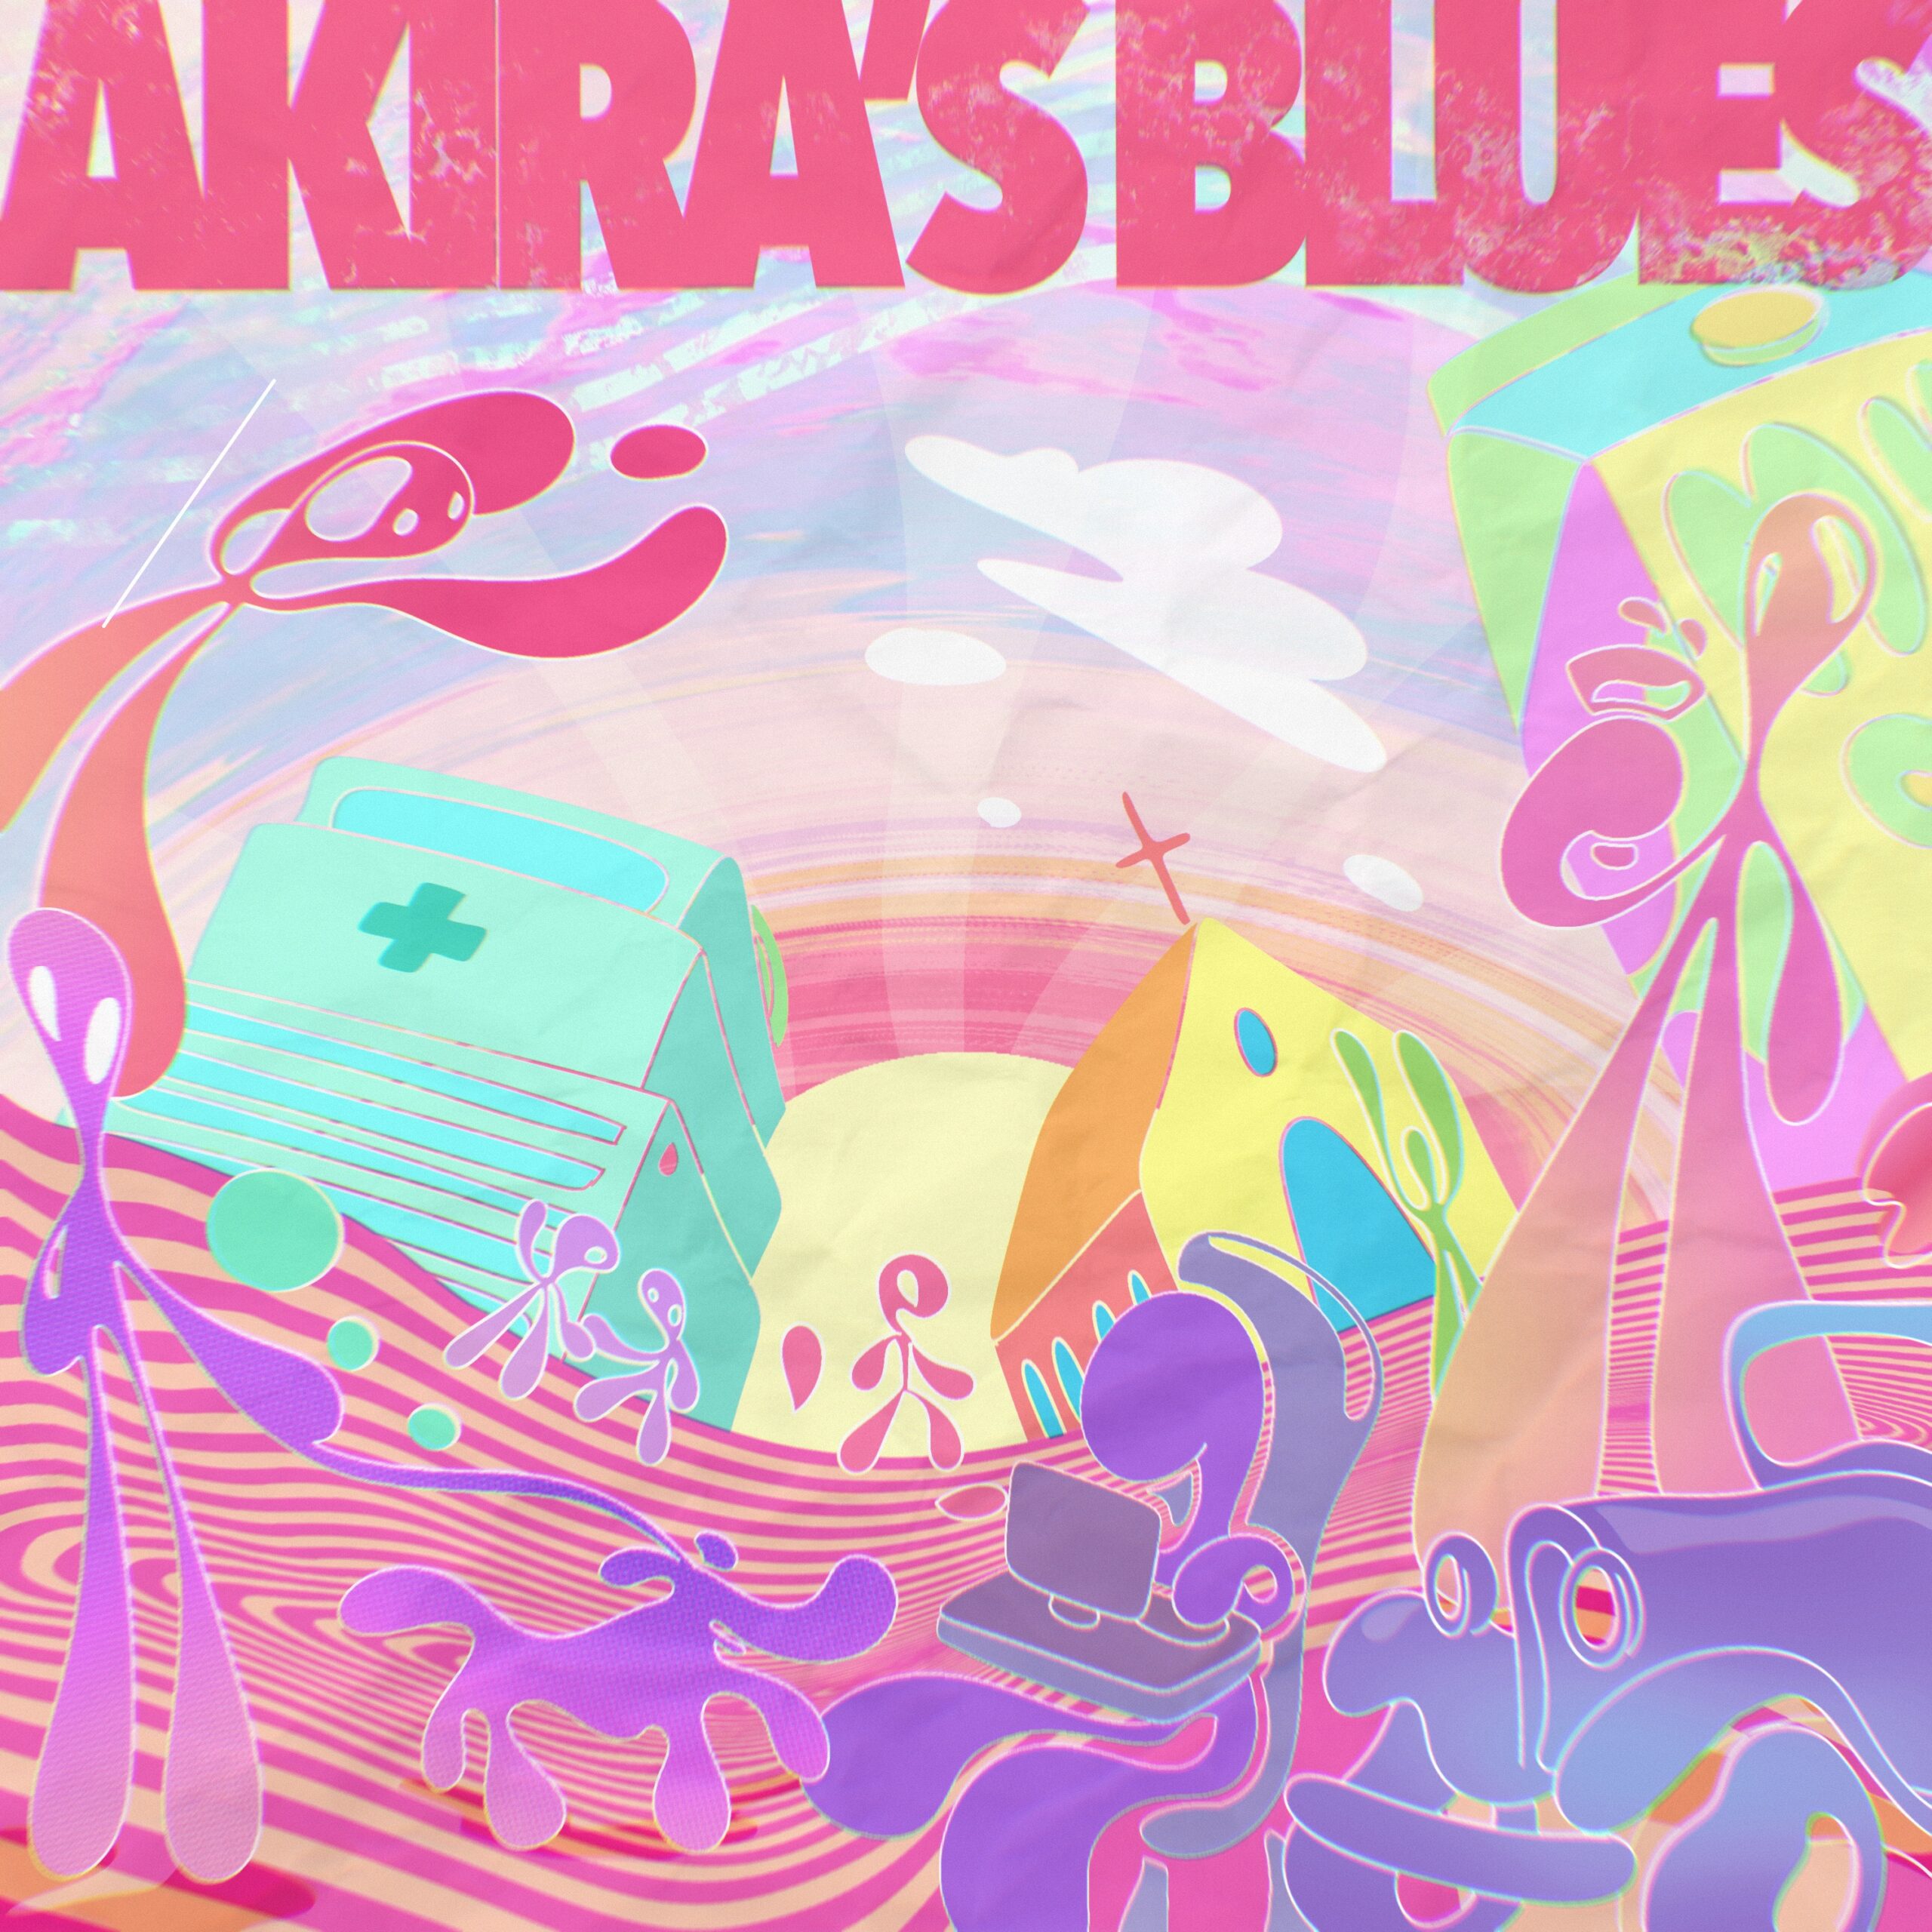 Trevour Amunga’s ‘Akira’s Blues’: A Soulful Journey of Struggle and Resilience